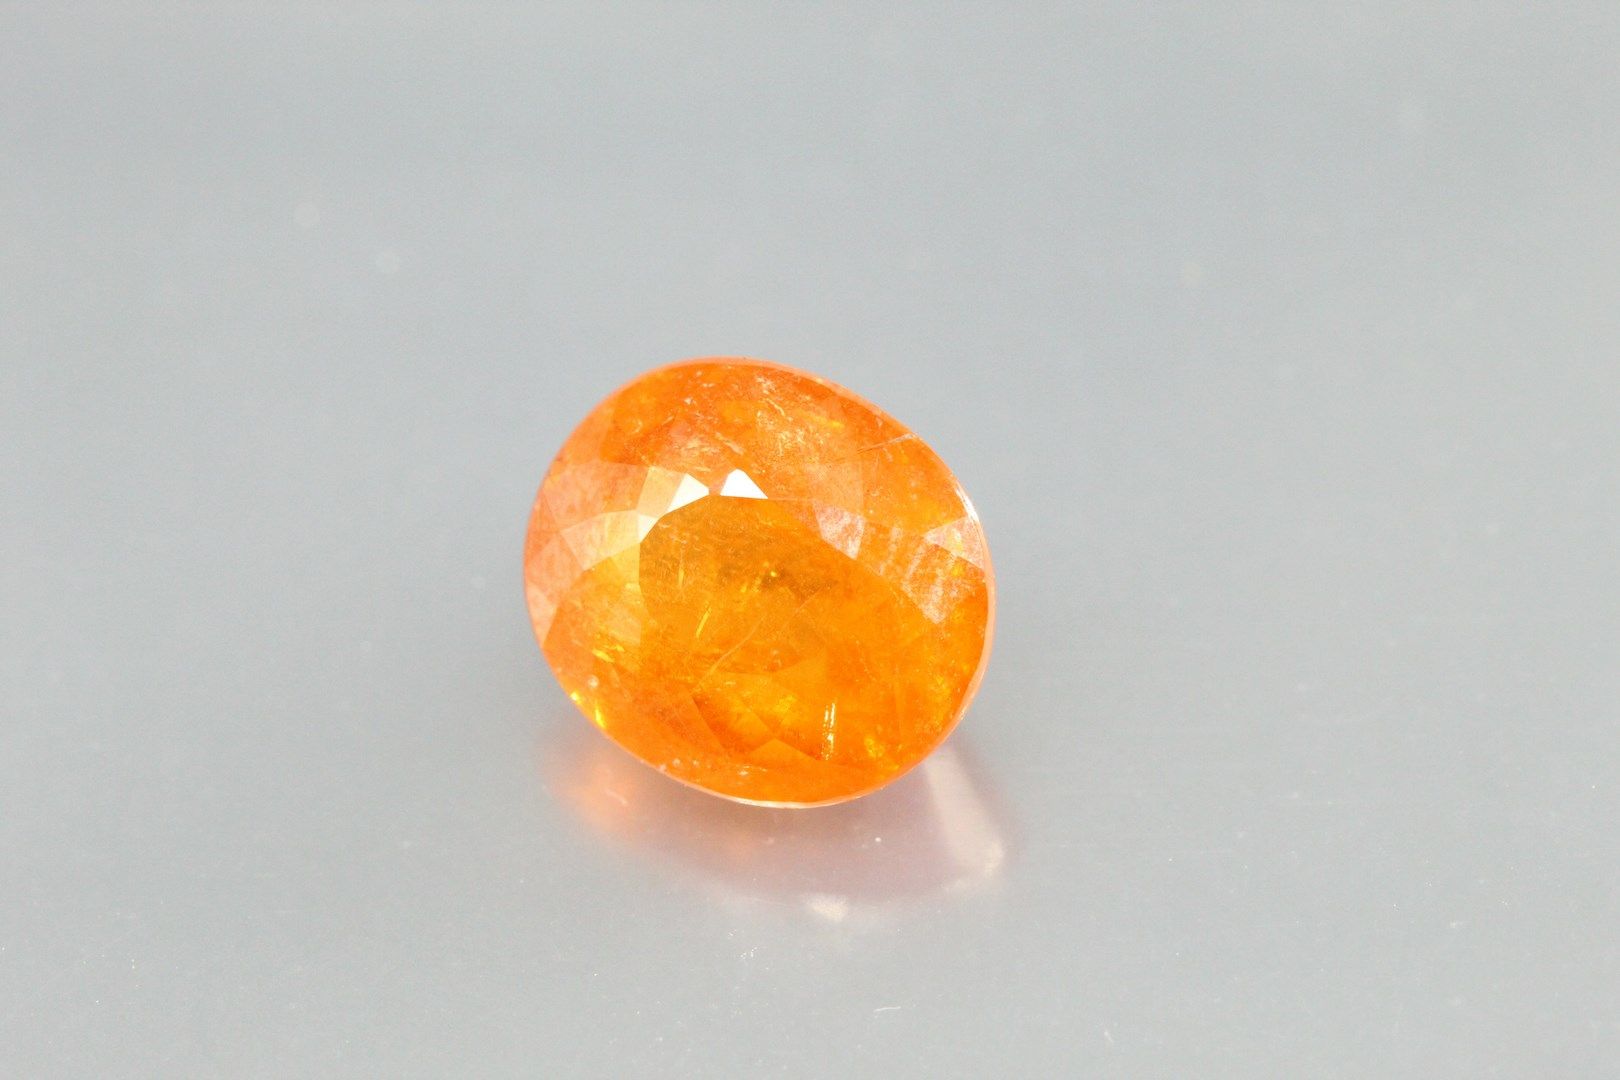 Null Zaffiro ovale arancione su carta.

Peso: 4,30 carati. 

Inclusioni.